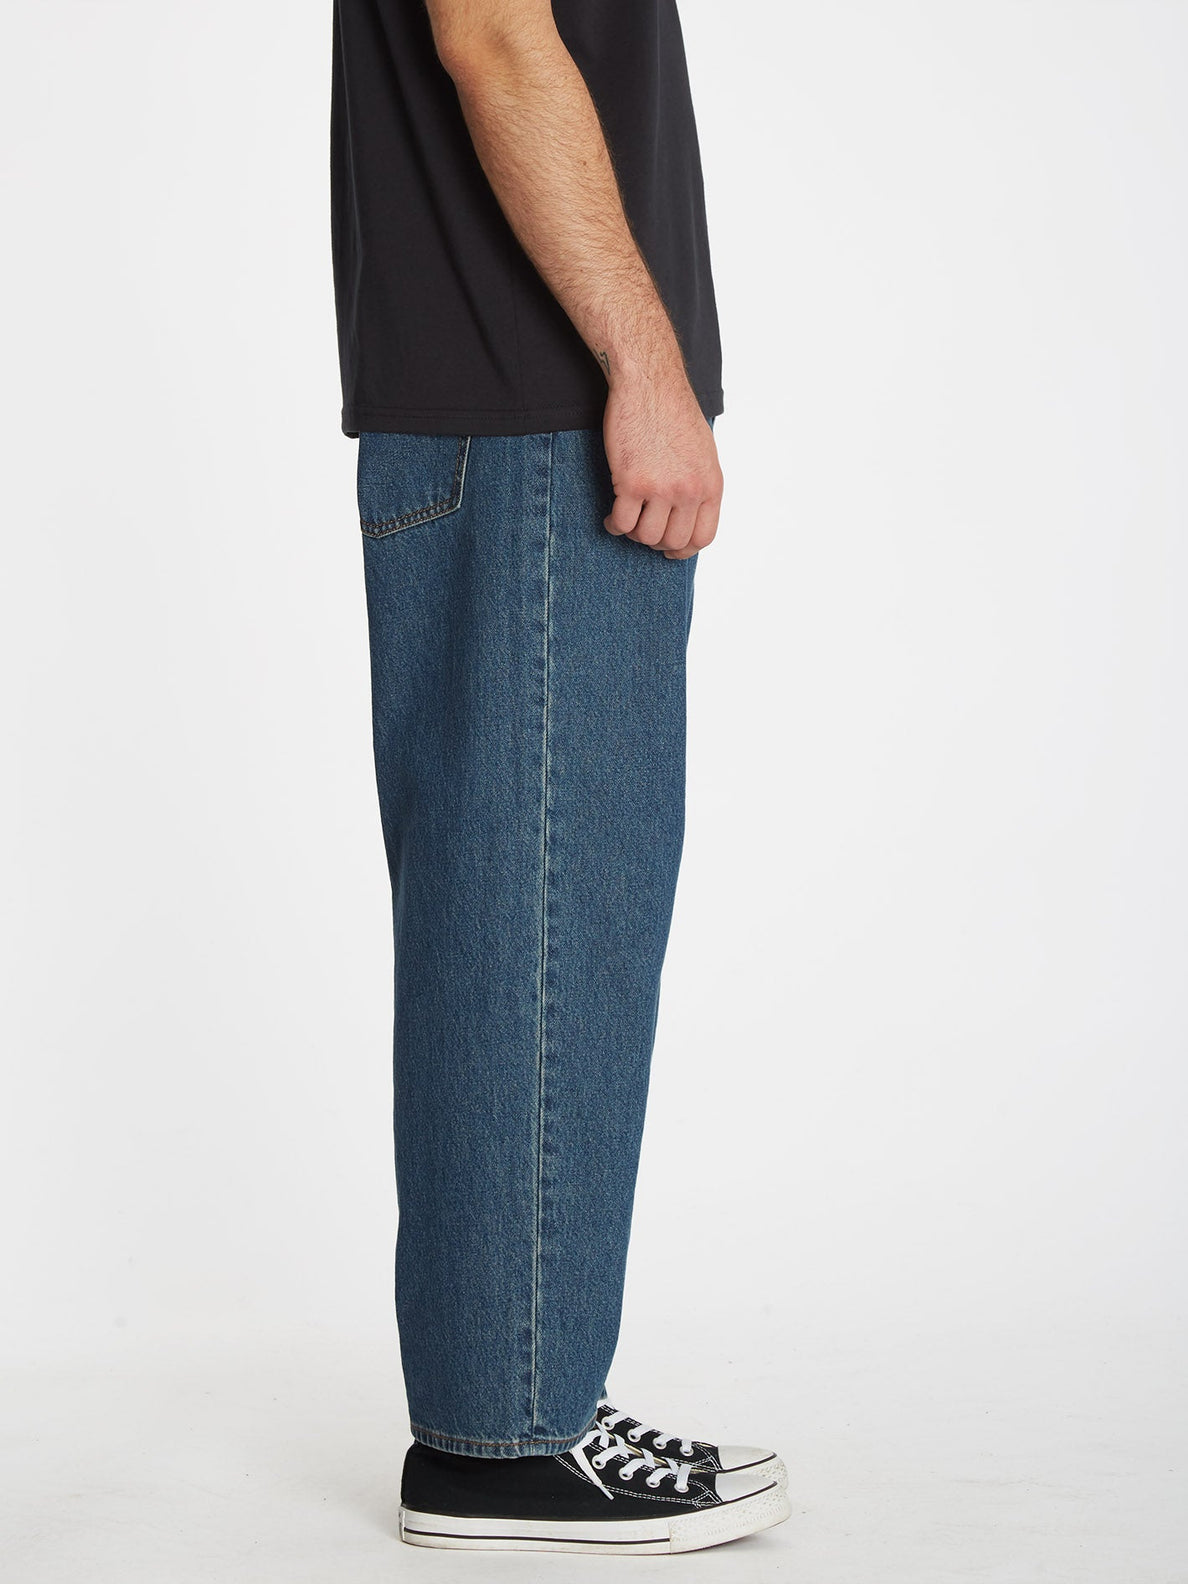 Billow Tapered Jeans - INDIGO RIDGE WASH (A1932200_IRW) [3]